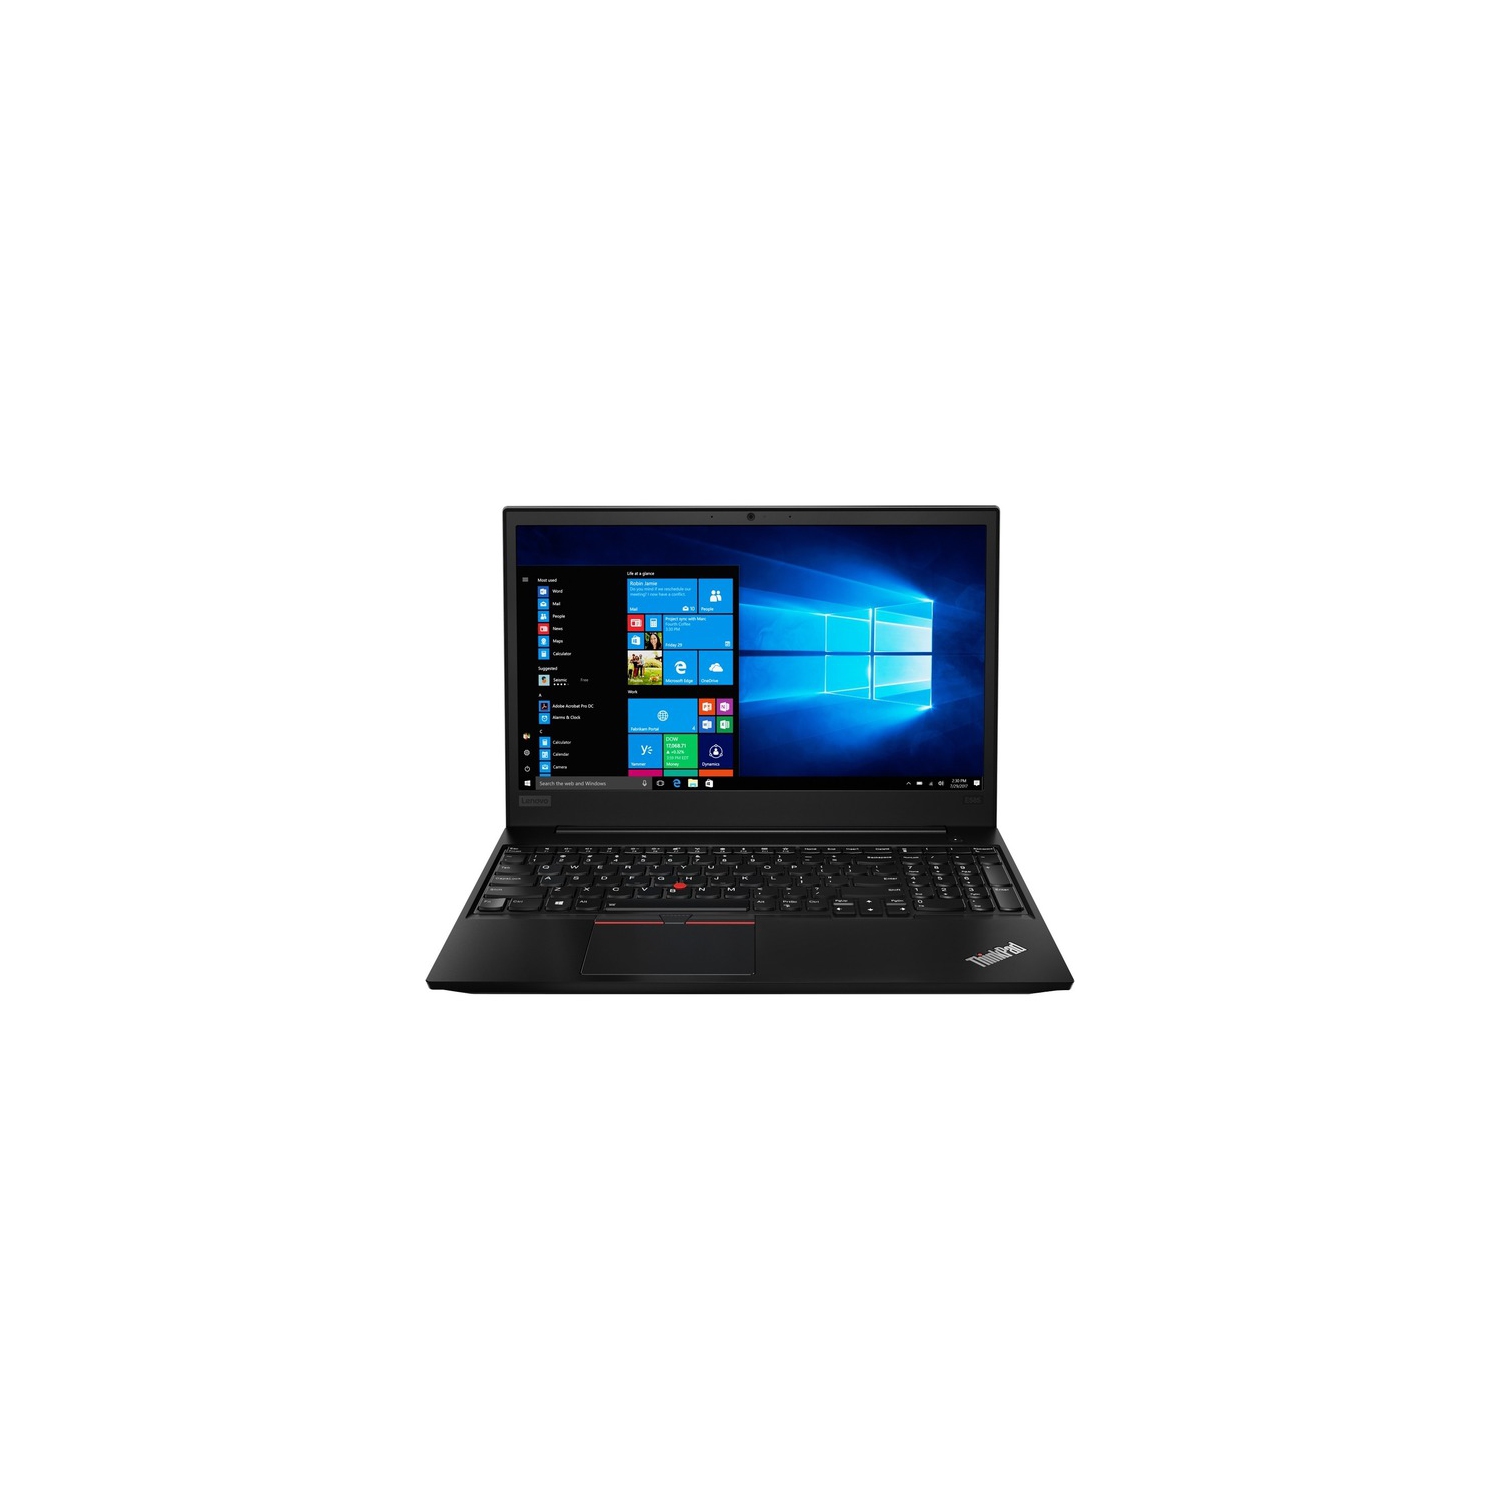 Lenovo ThinkPad E585 20KV000XUS 15.6" Notebook - 1366 x 768 - Ryzen 3 2200U - 4 GB RAM - 500 GB HDD - Glossy Black